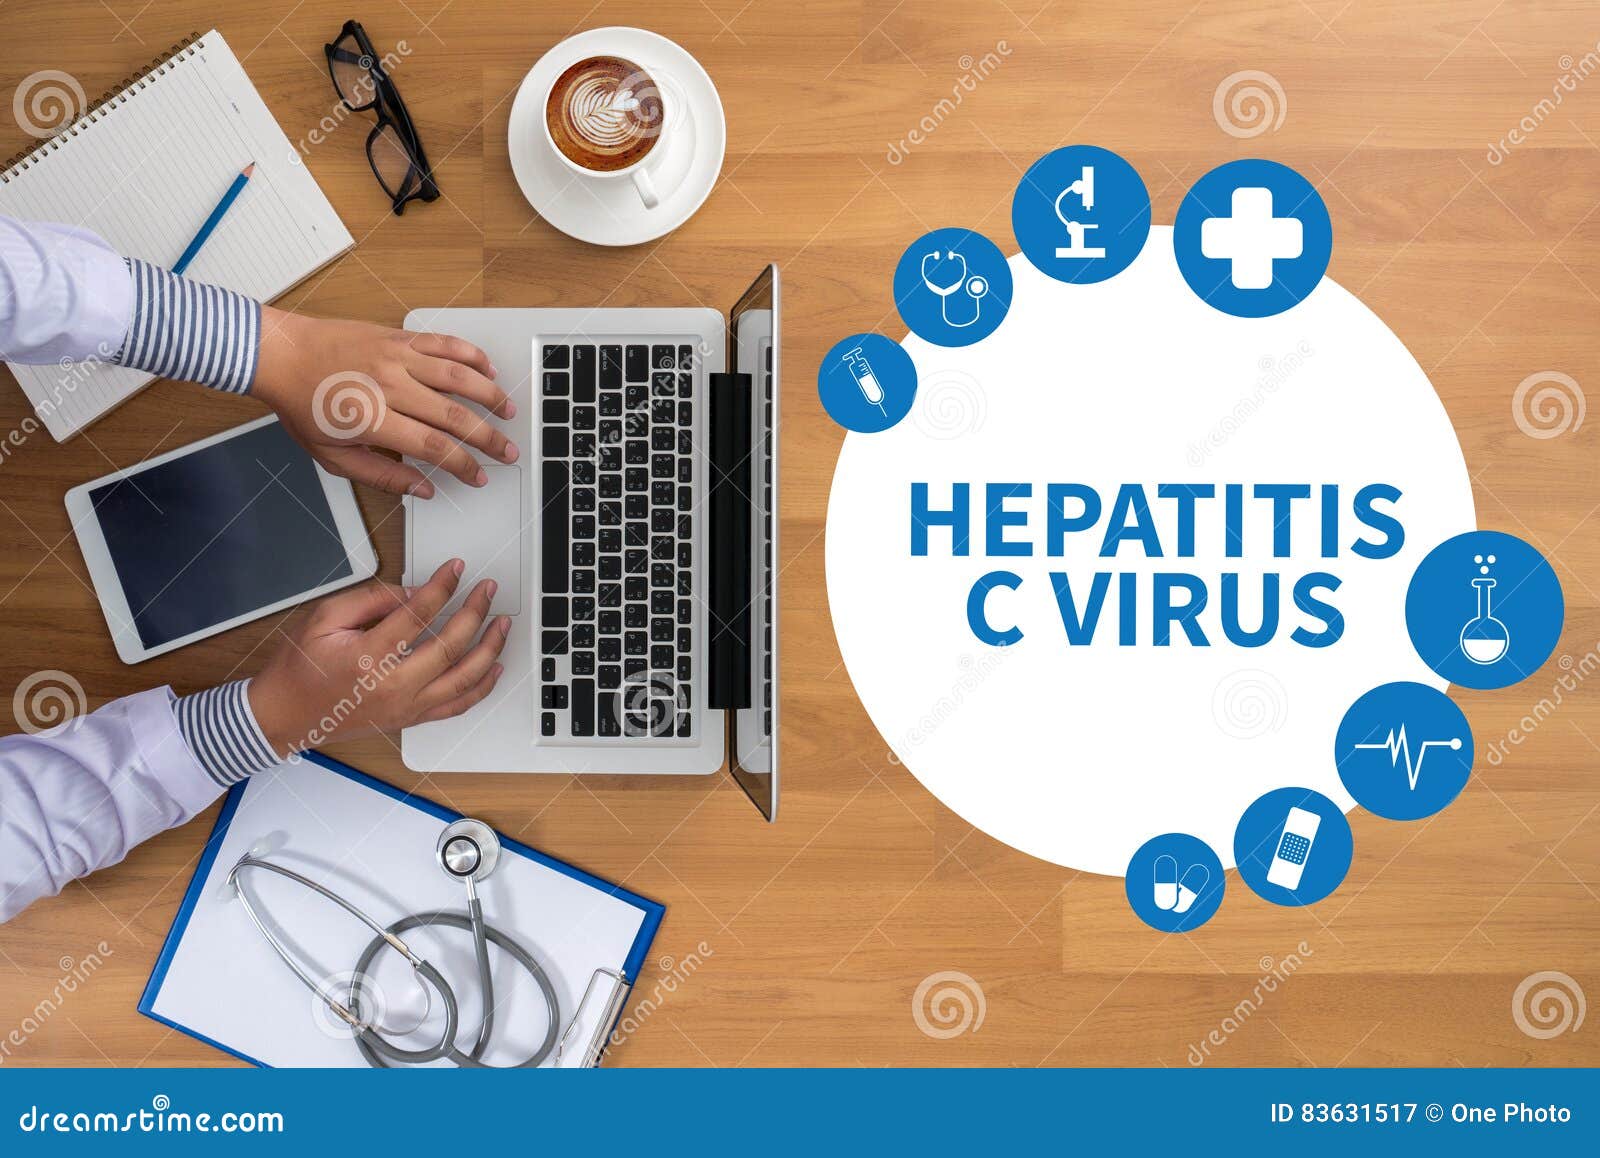 hepatitis c virus , hcv. medical report , hepatitis c virus (hcv) testing , drugs for hepatitis c virus (hcv) treatment , hcv he